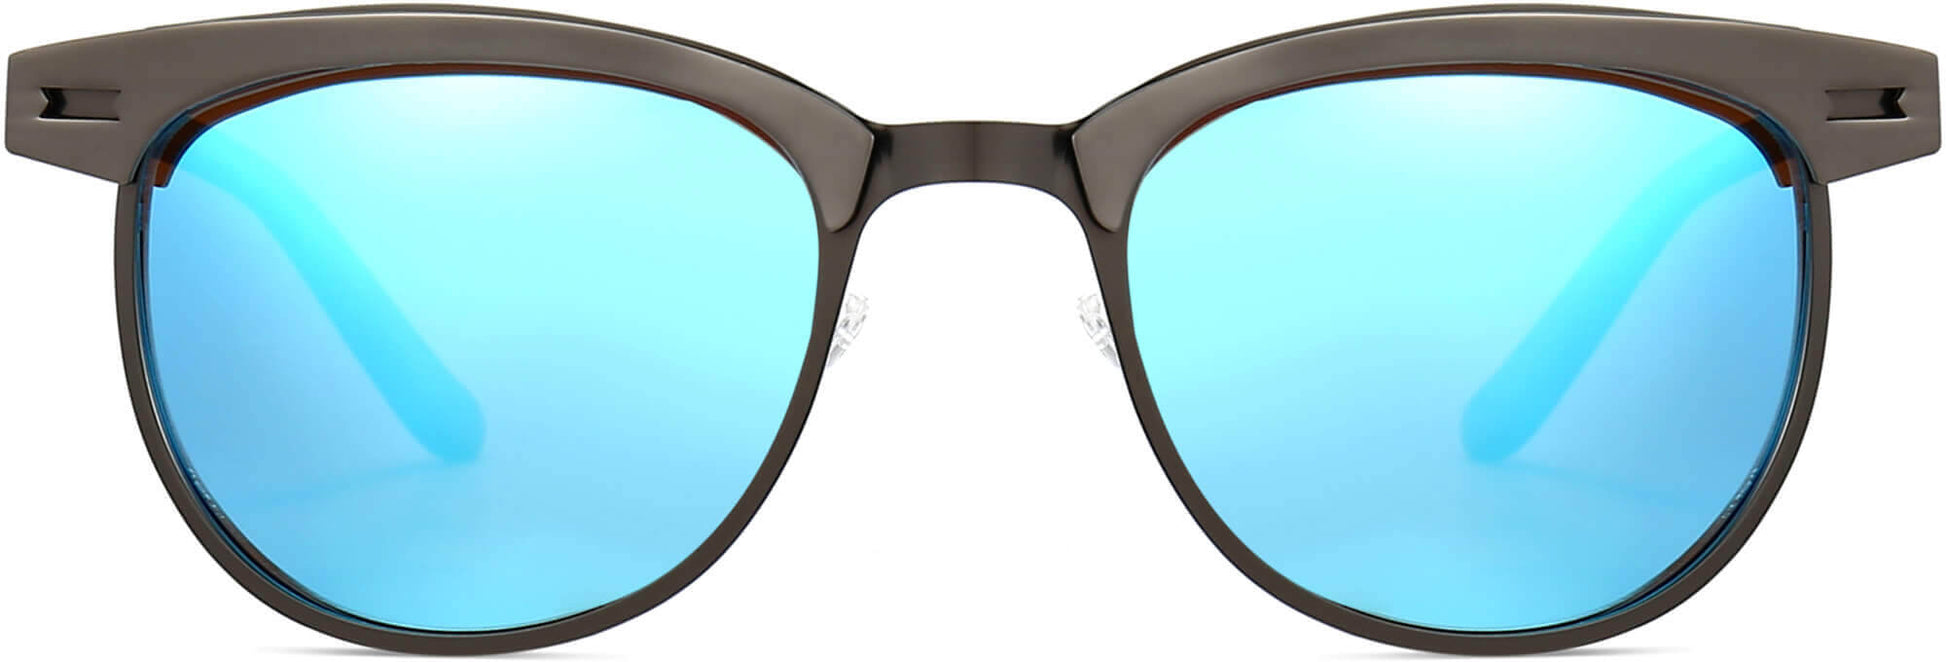 D Blue Tortoise Sunglasses - SFMOMA Museum Store